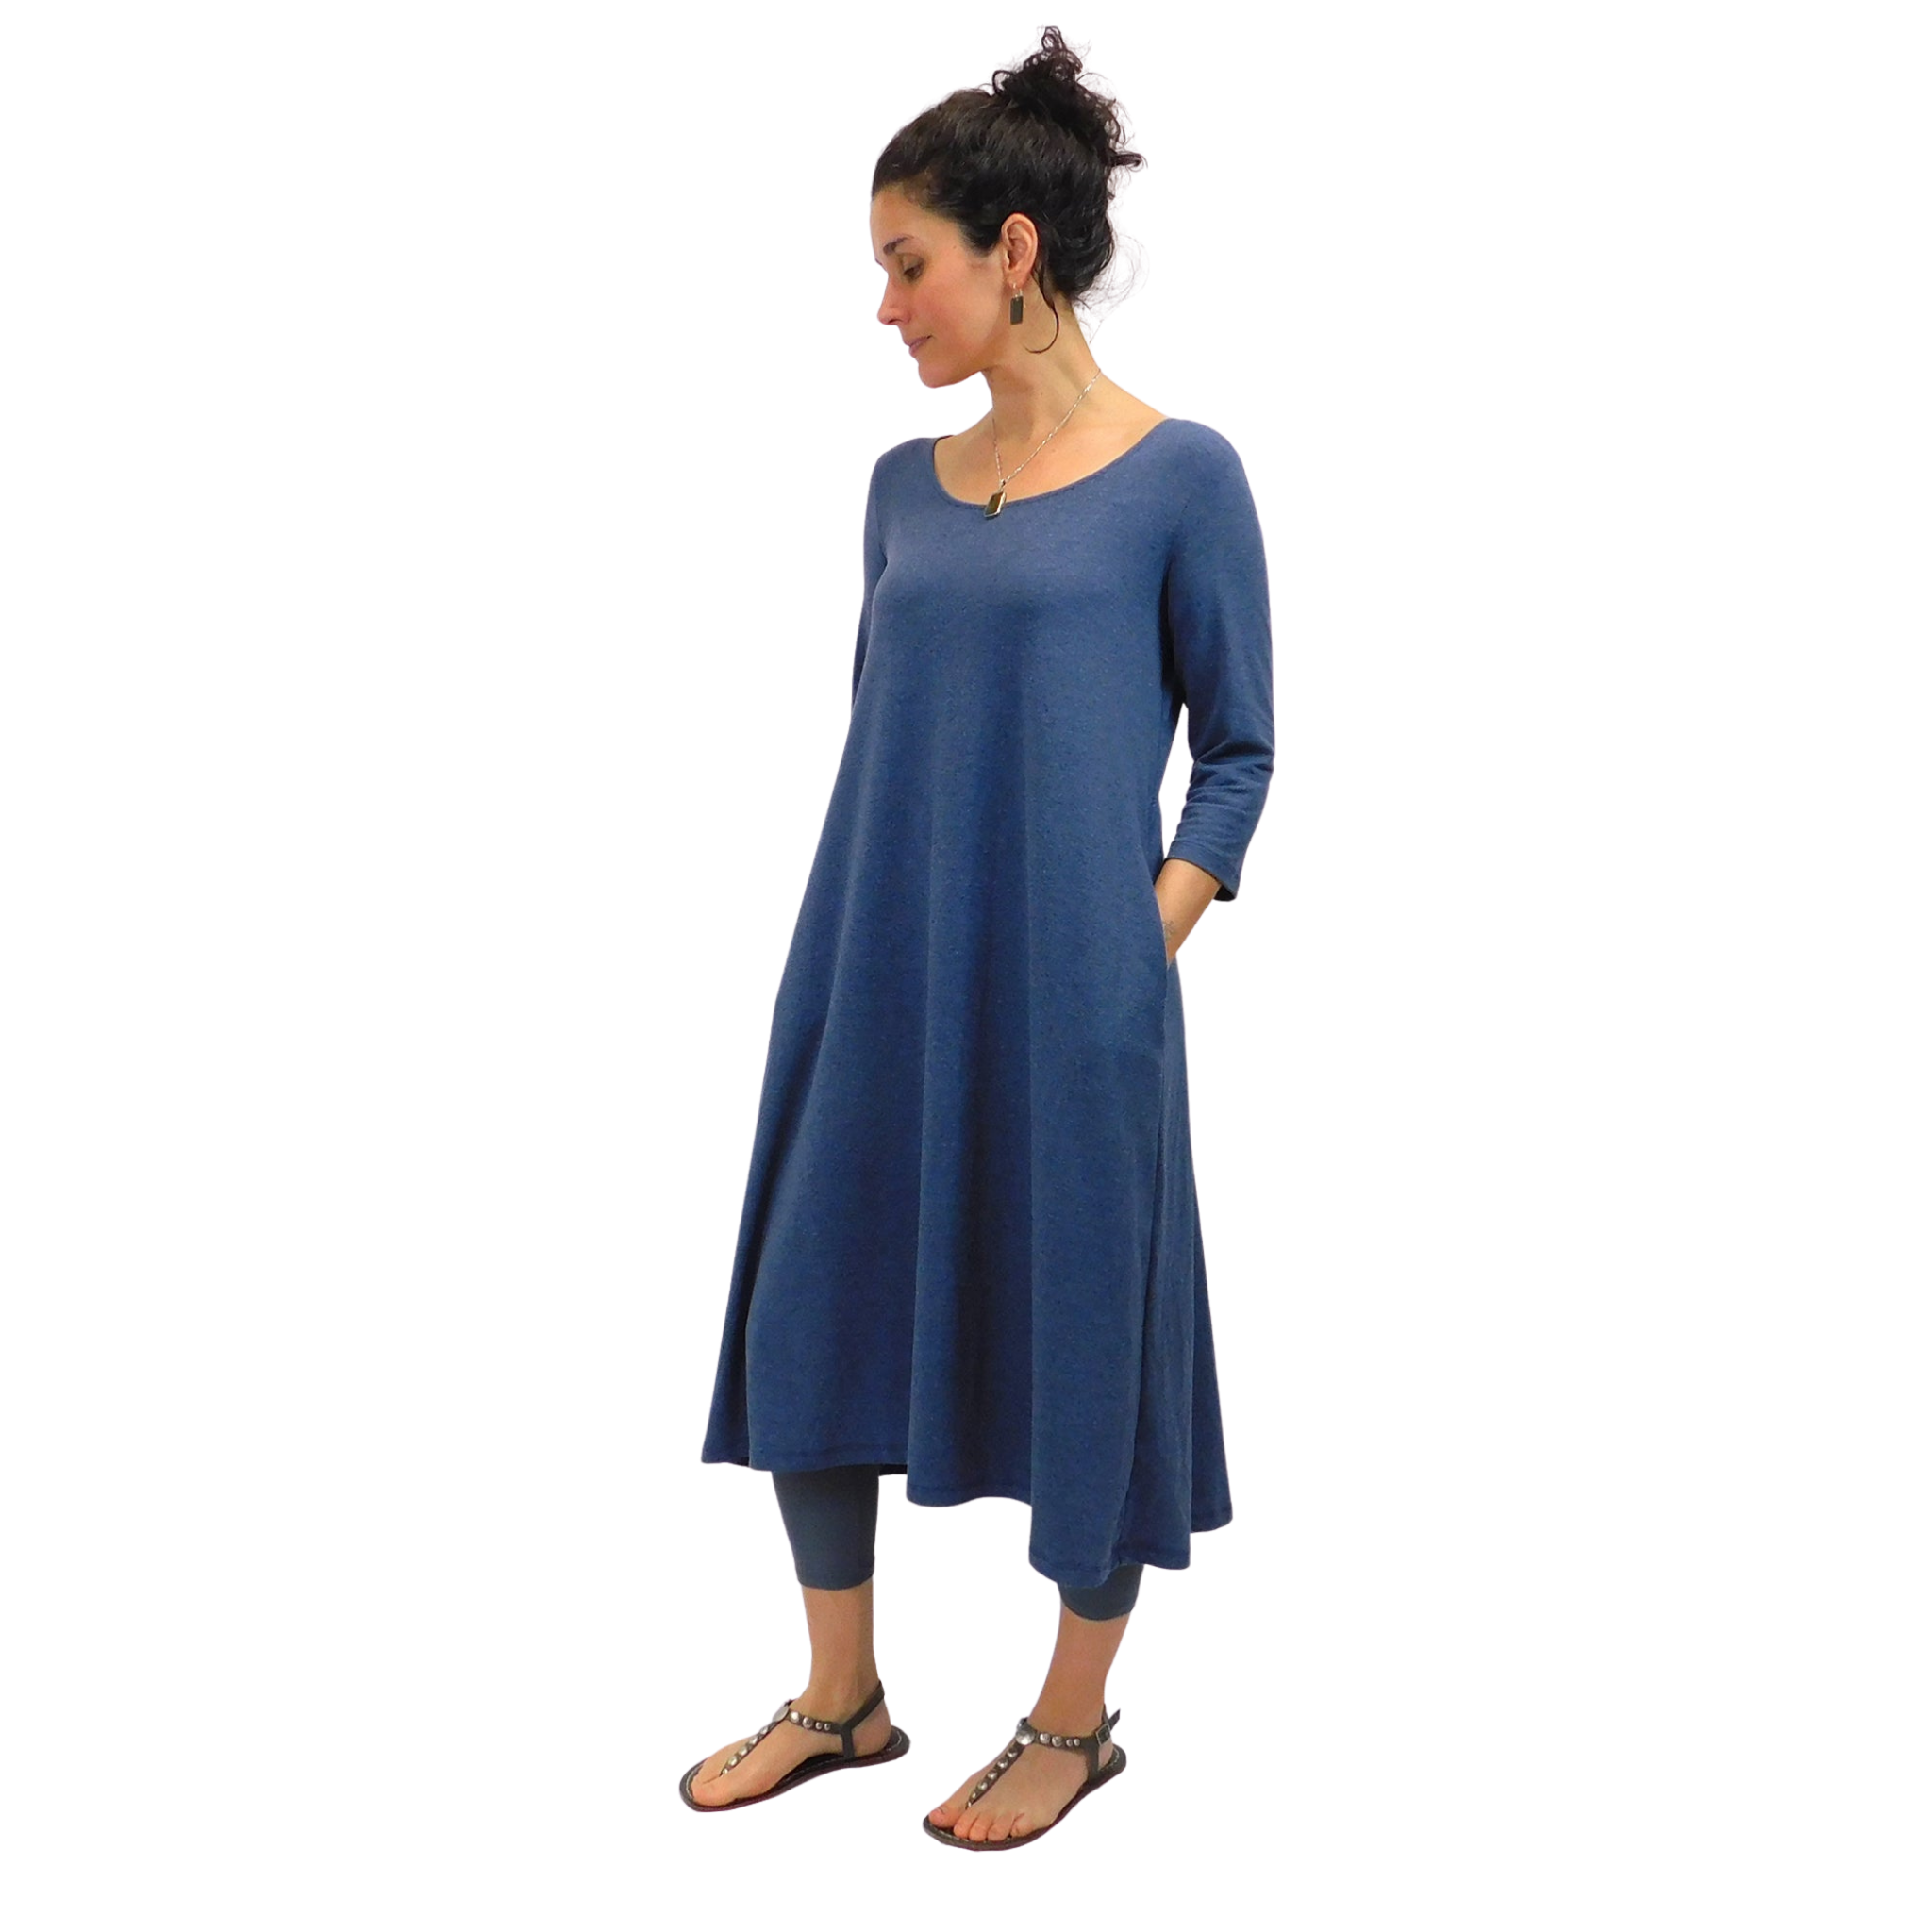 Bamboo 3/4 Sleeve Long Tunic Dress with Pockets